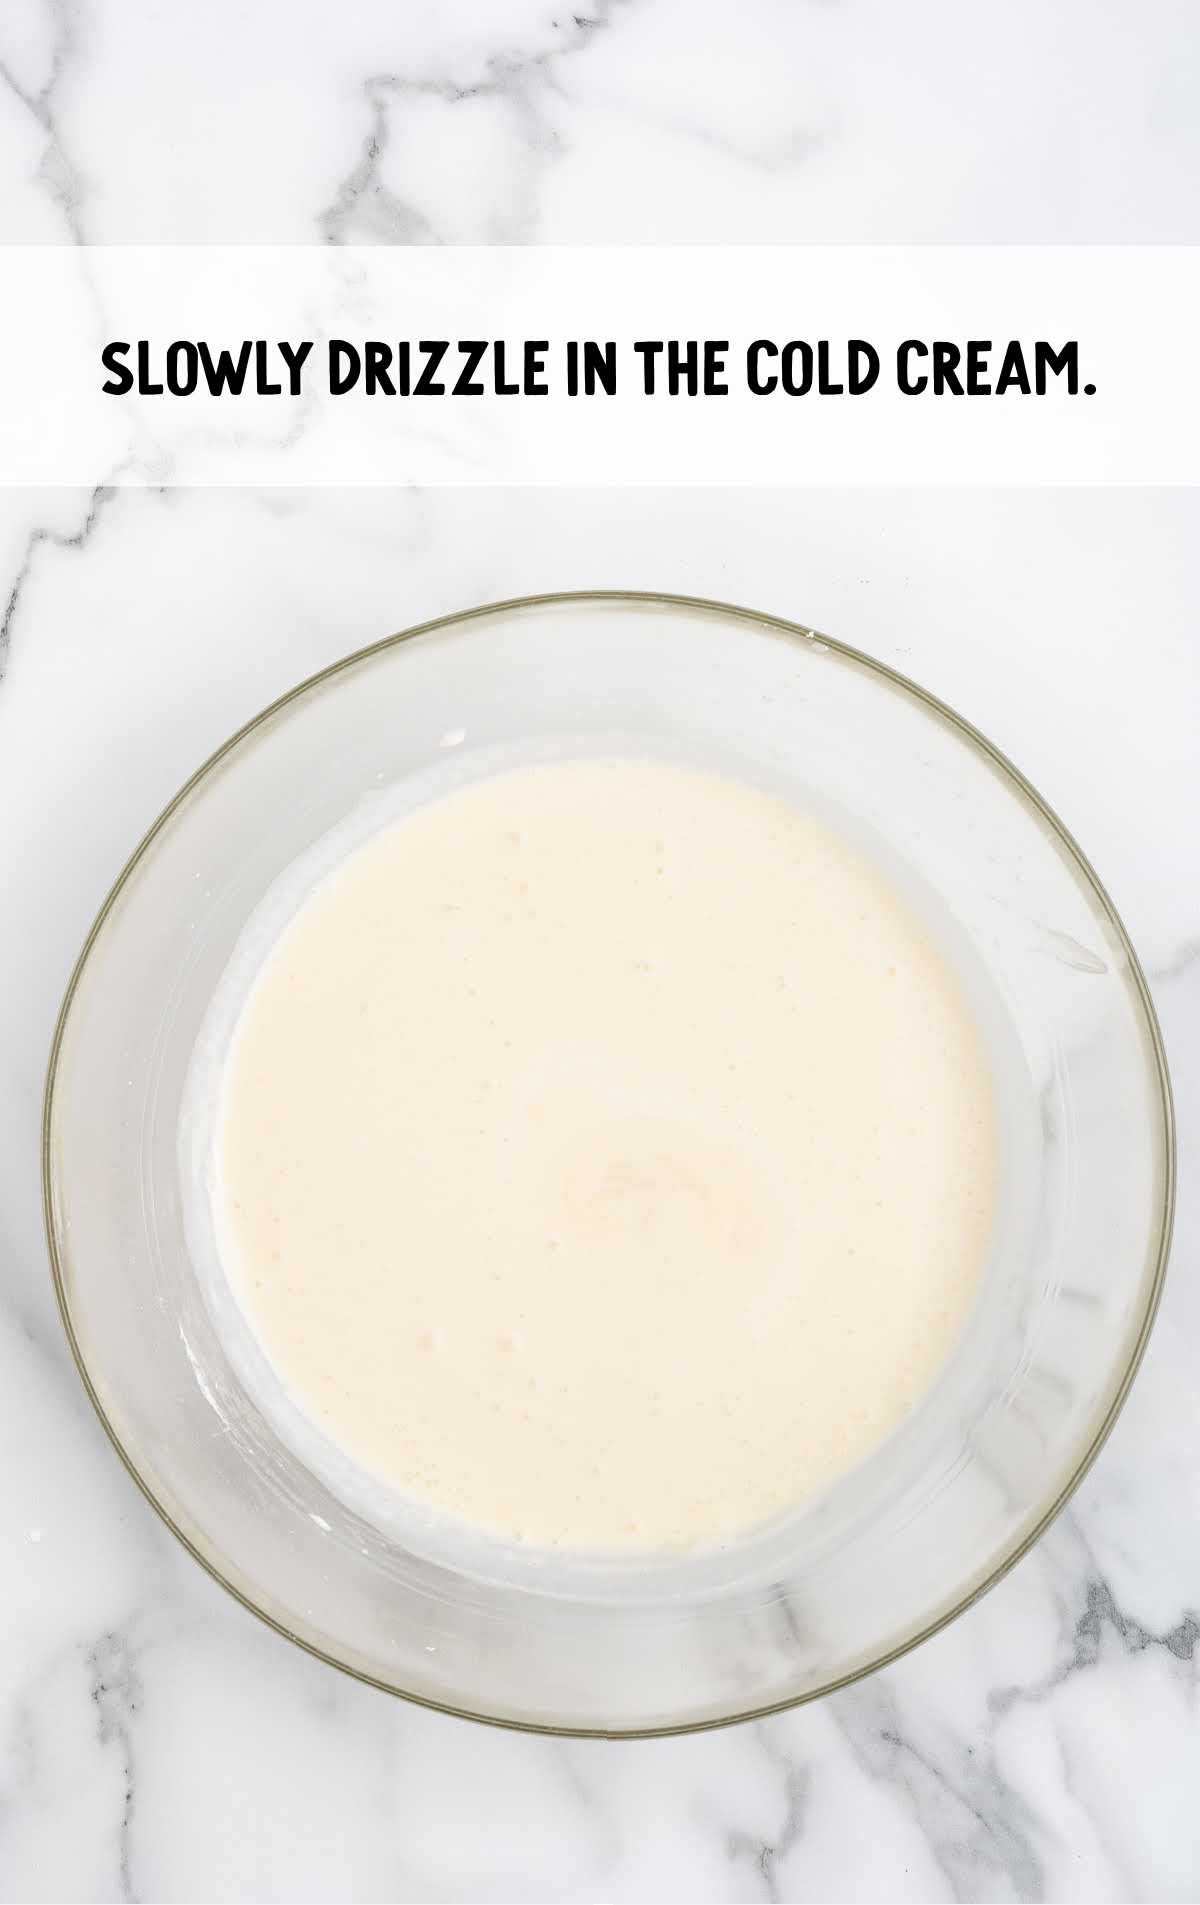 cold cream drizzled into the bowl